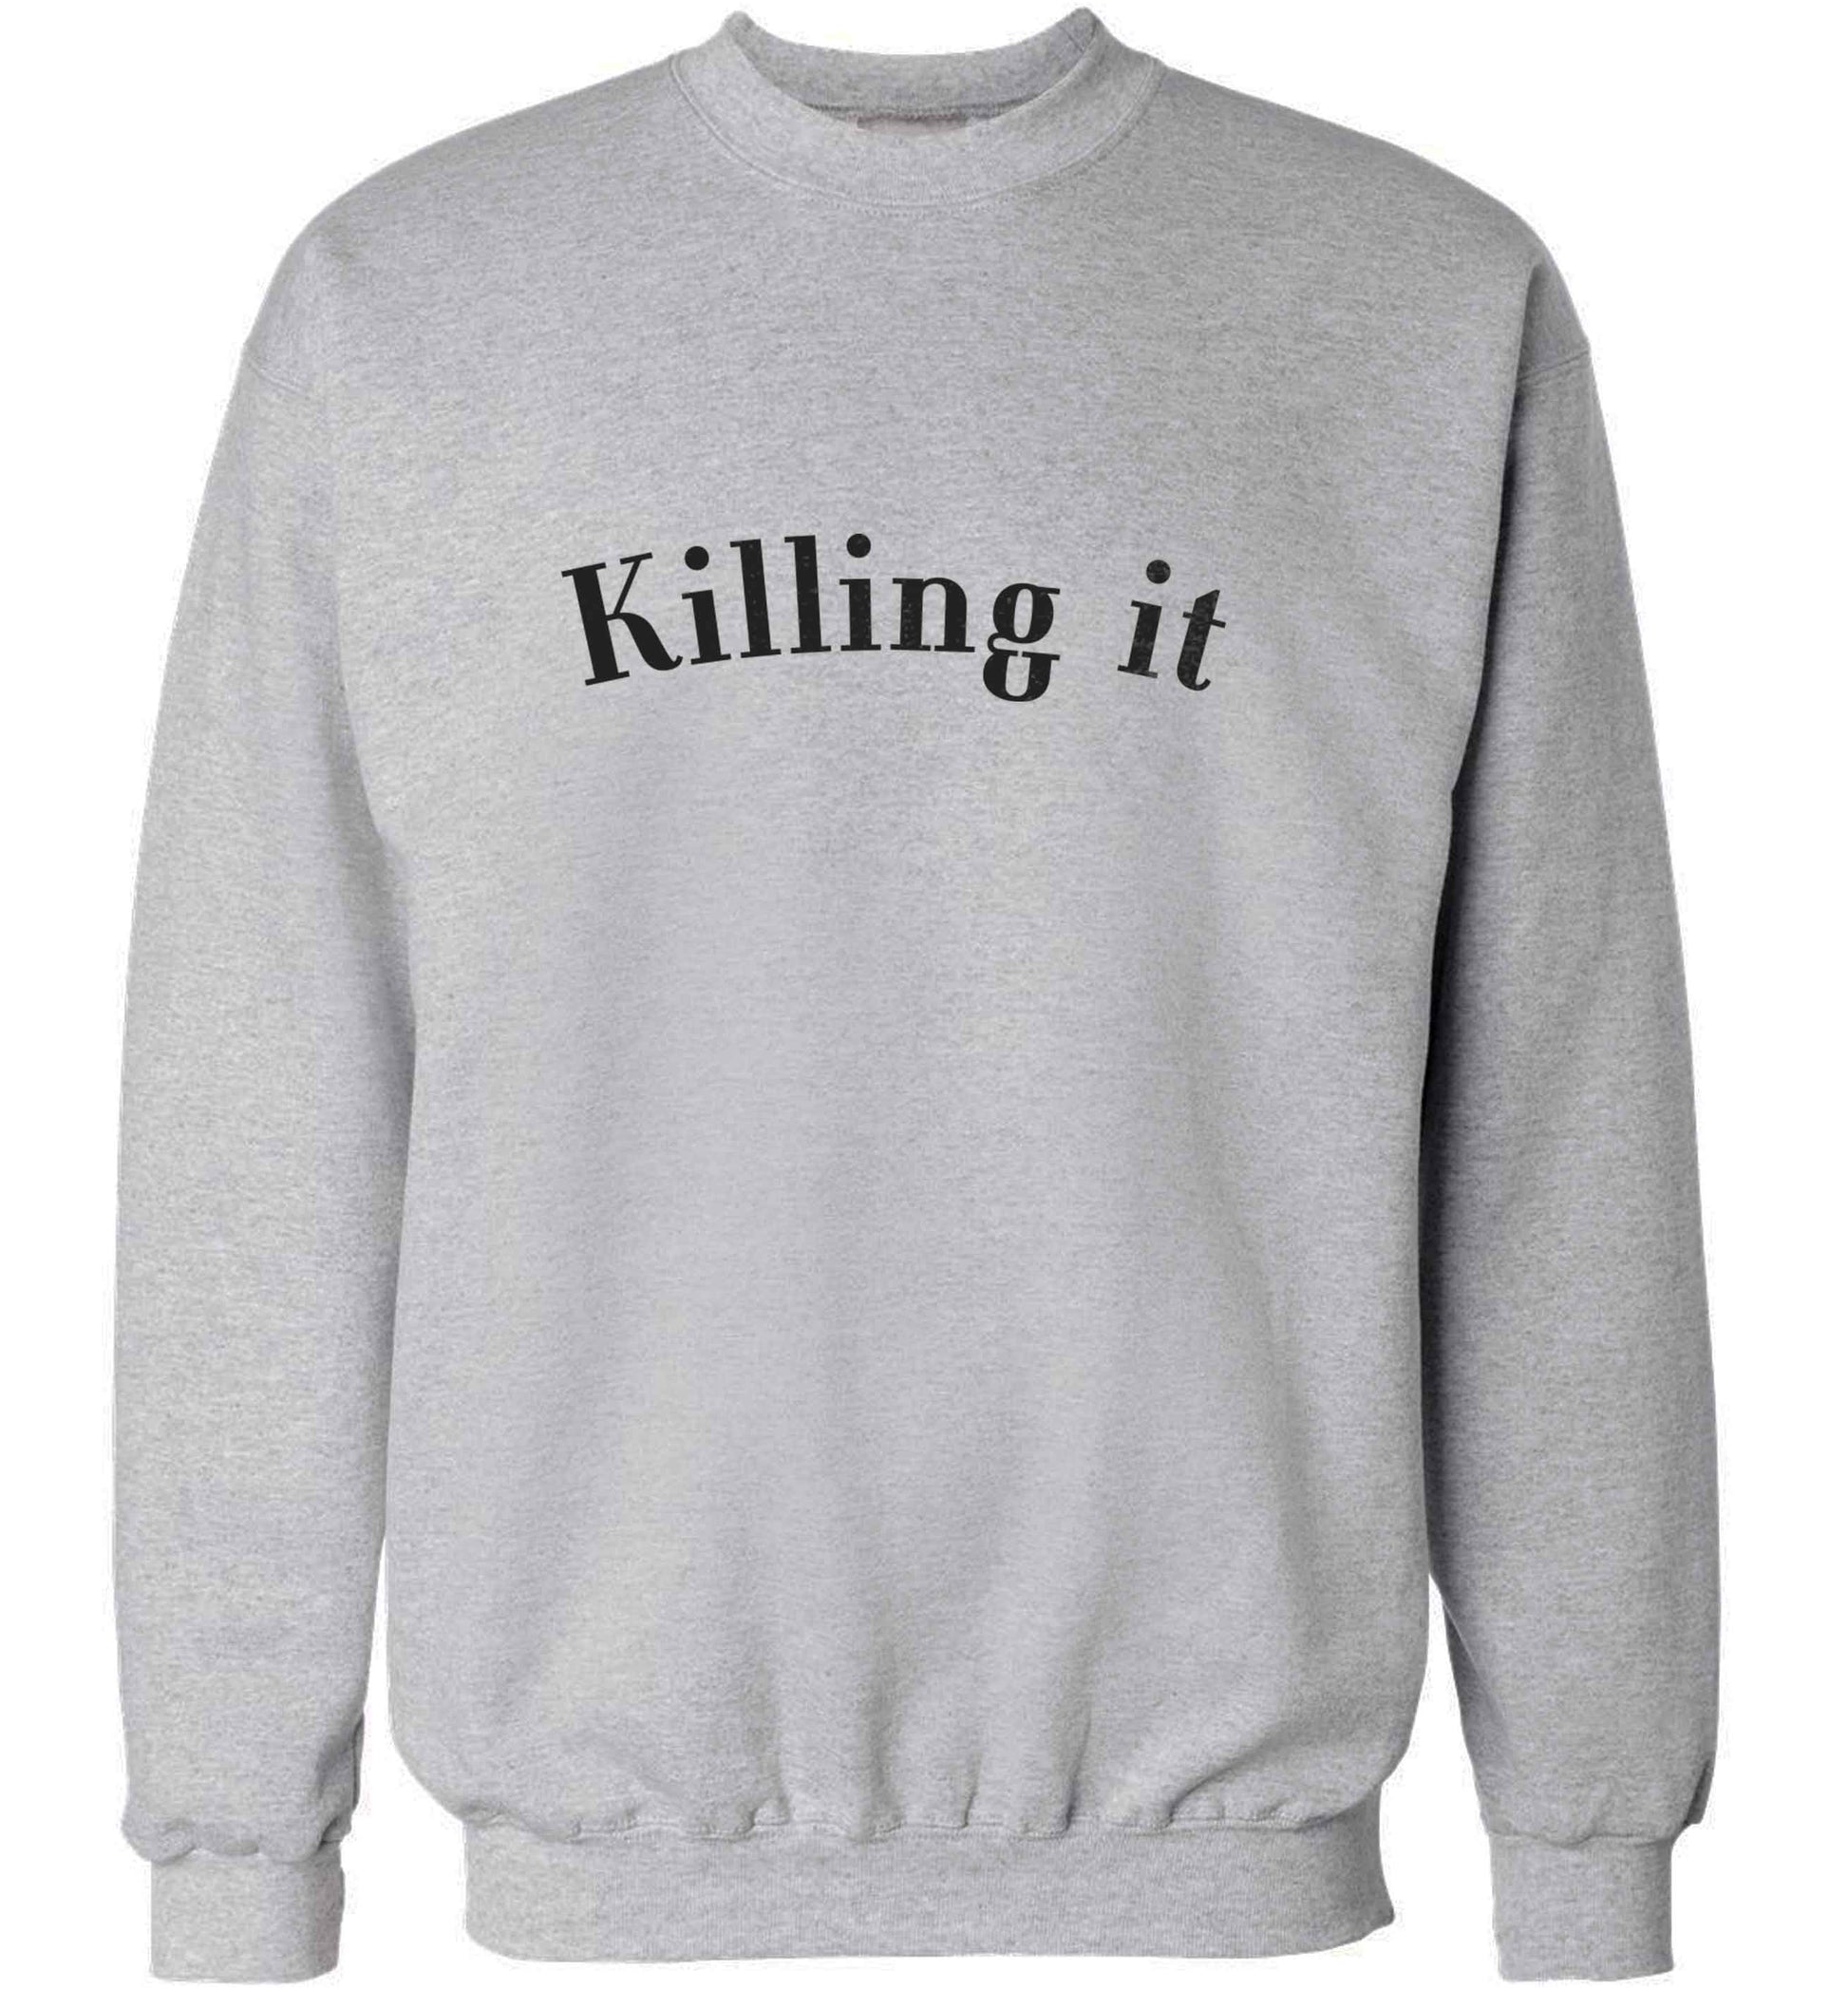 Killing it adult's unisex grey sweater 2XL